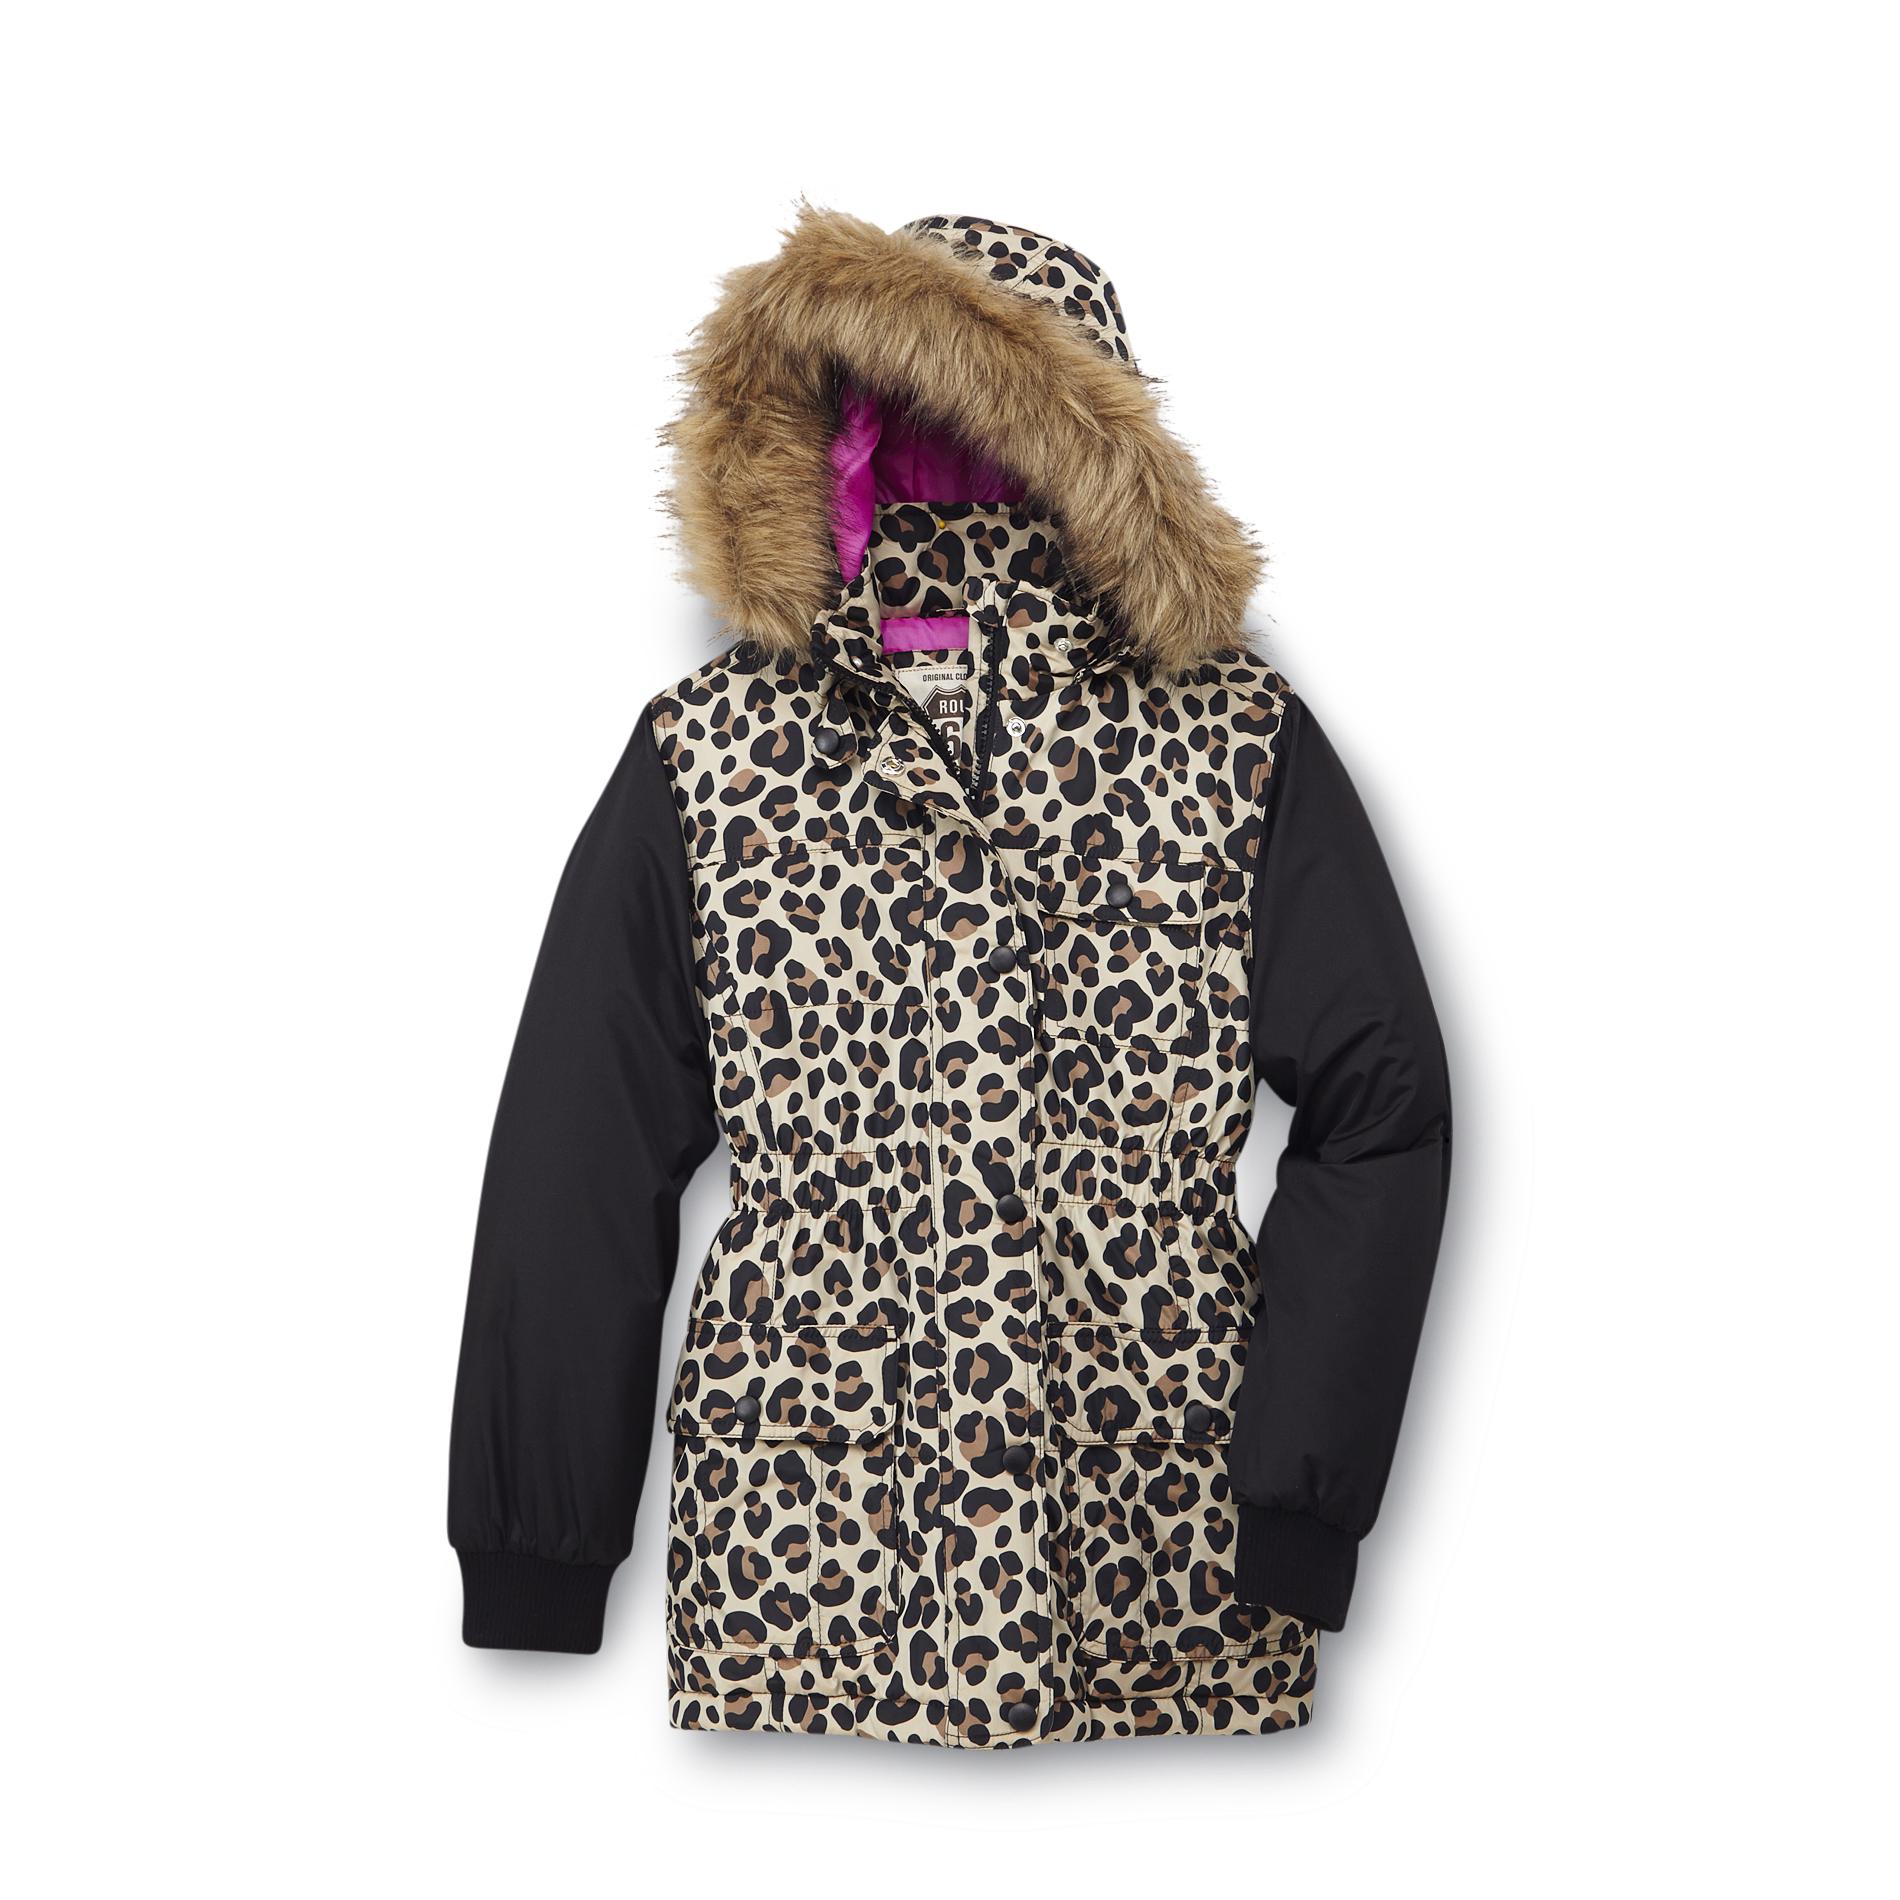 Route 66 Girl's Hooded Coat - Leopard Print